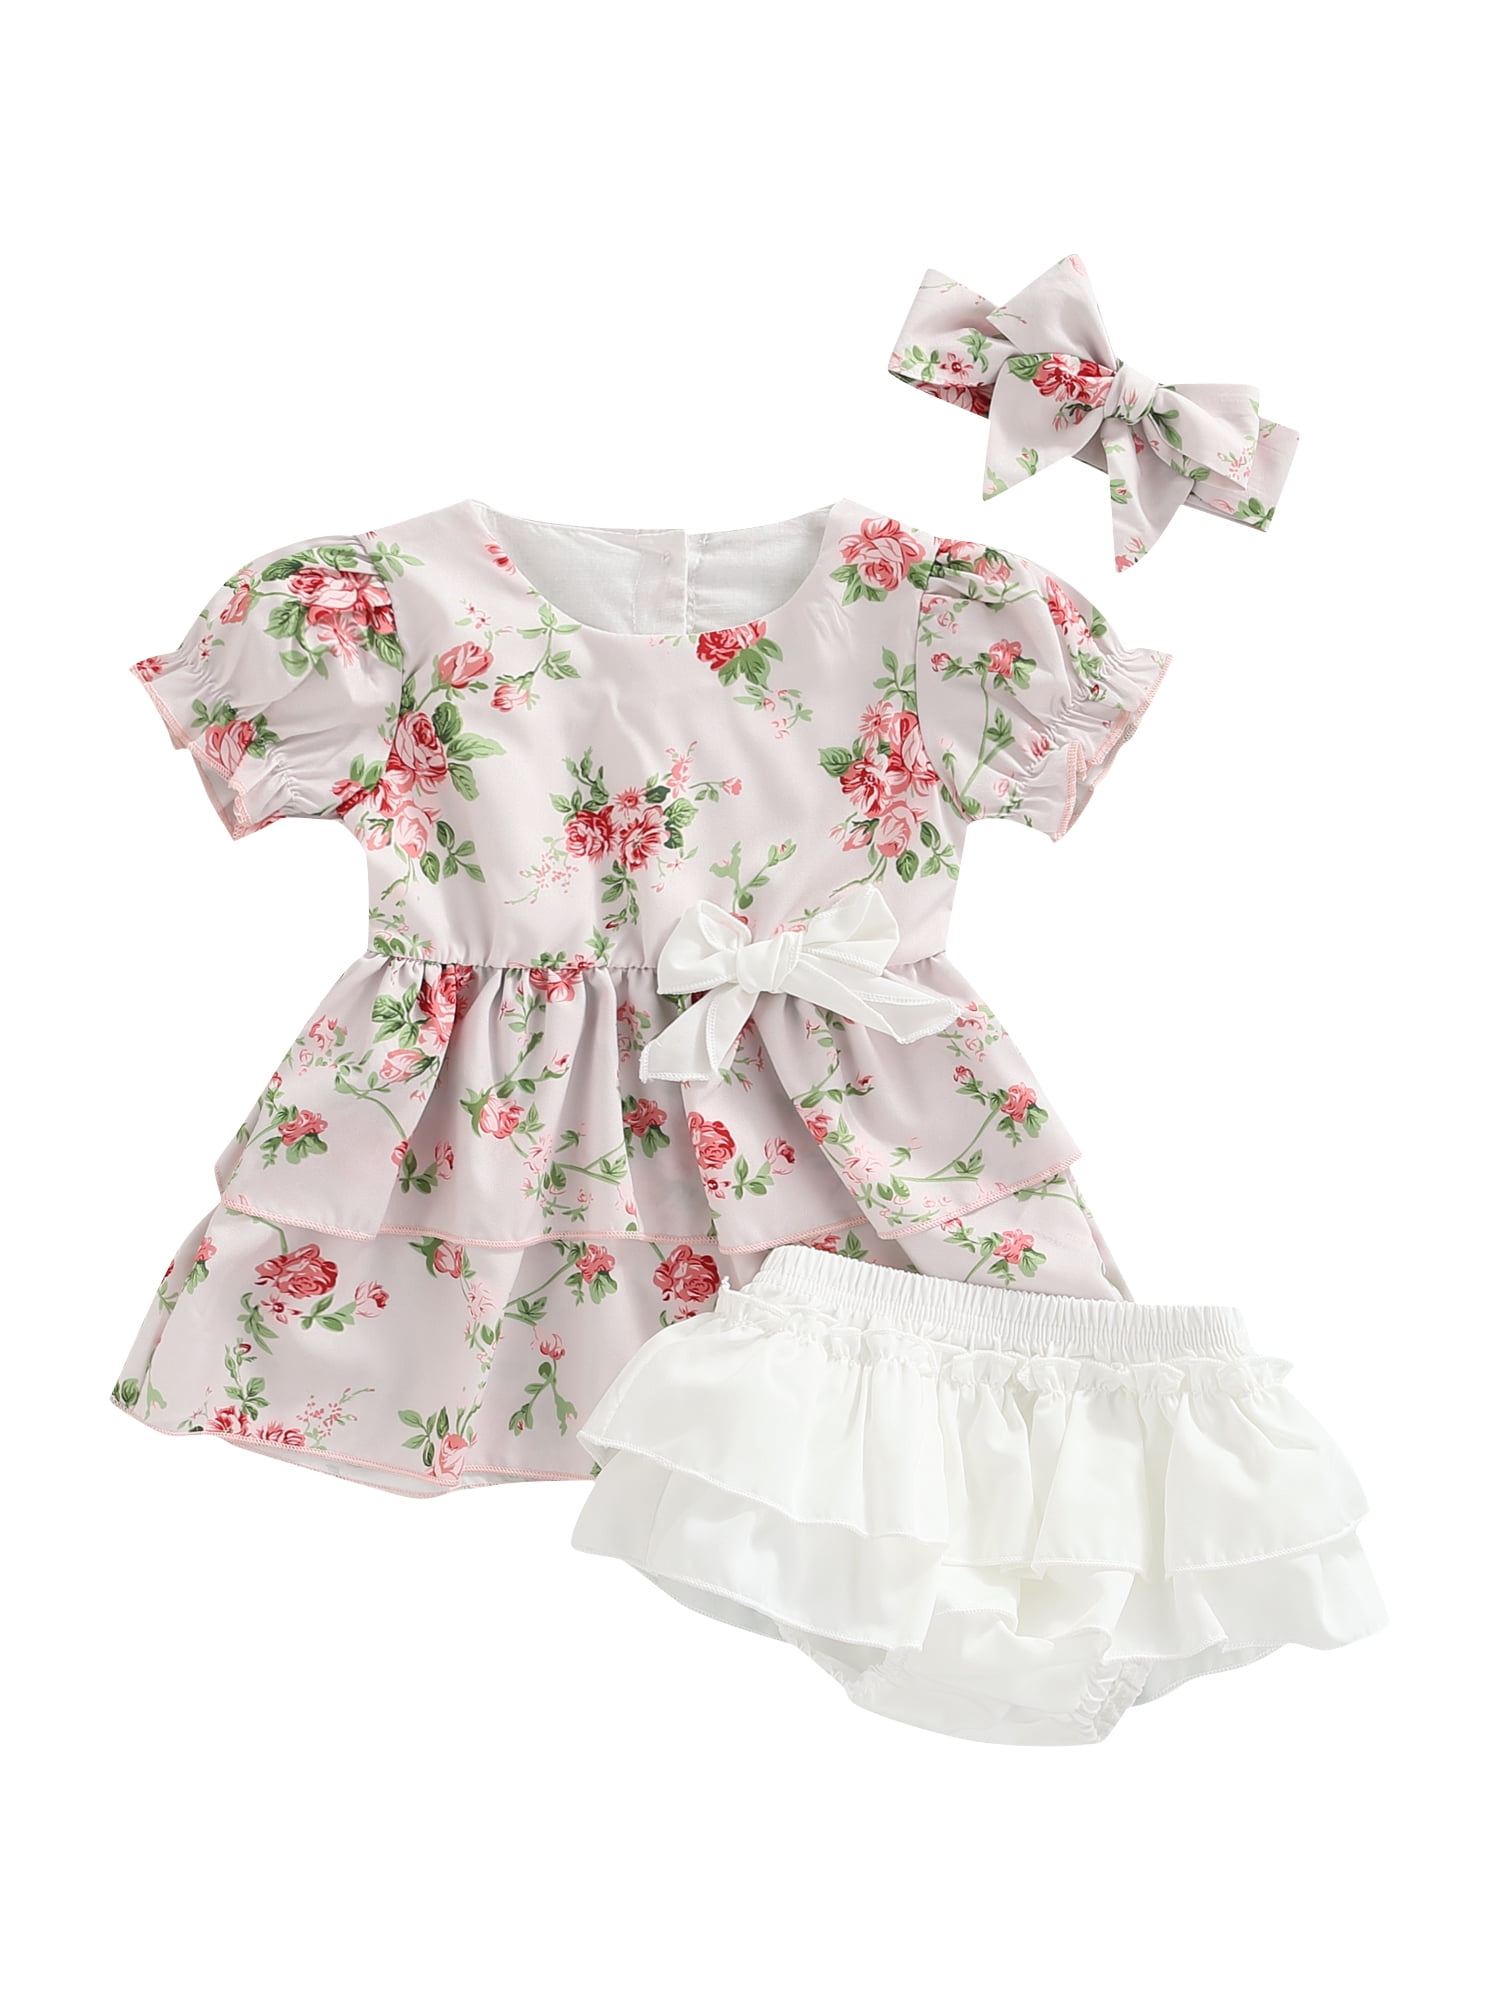 Baby girls clothes sailor wheel dress pants headband set 6-12 12-18 18-23 months 